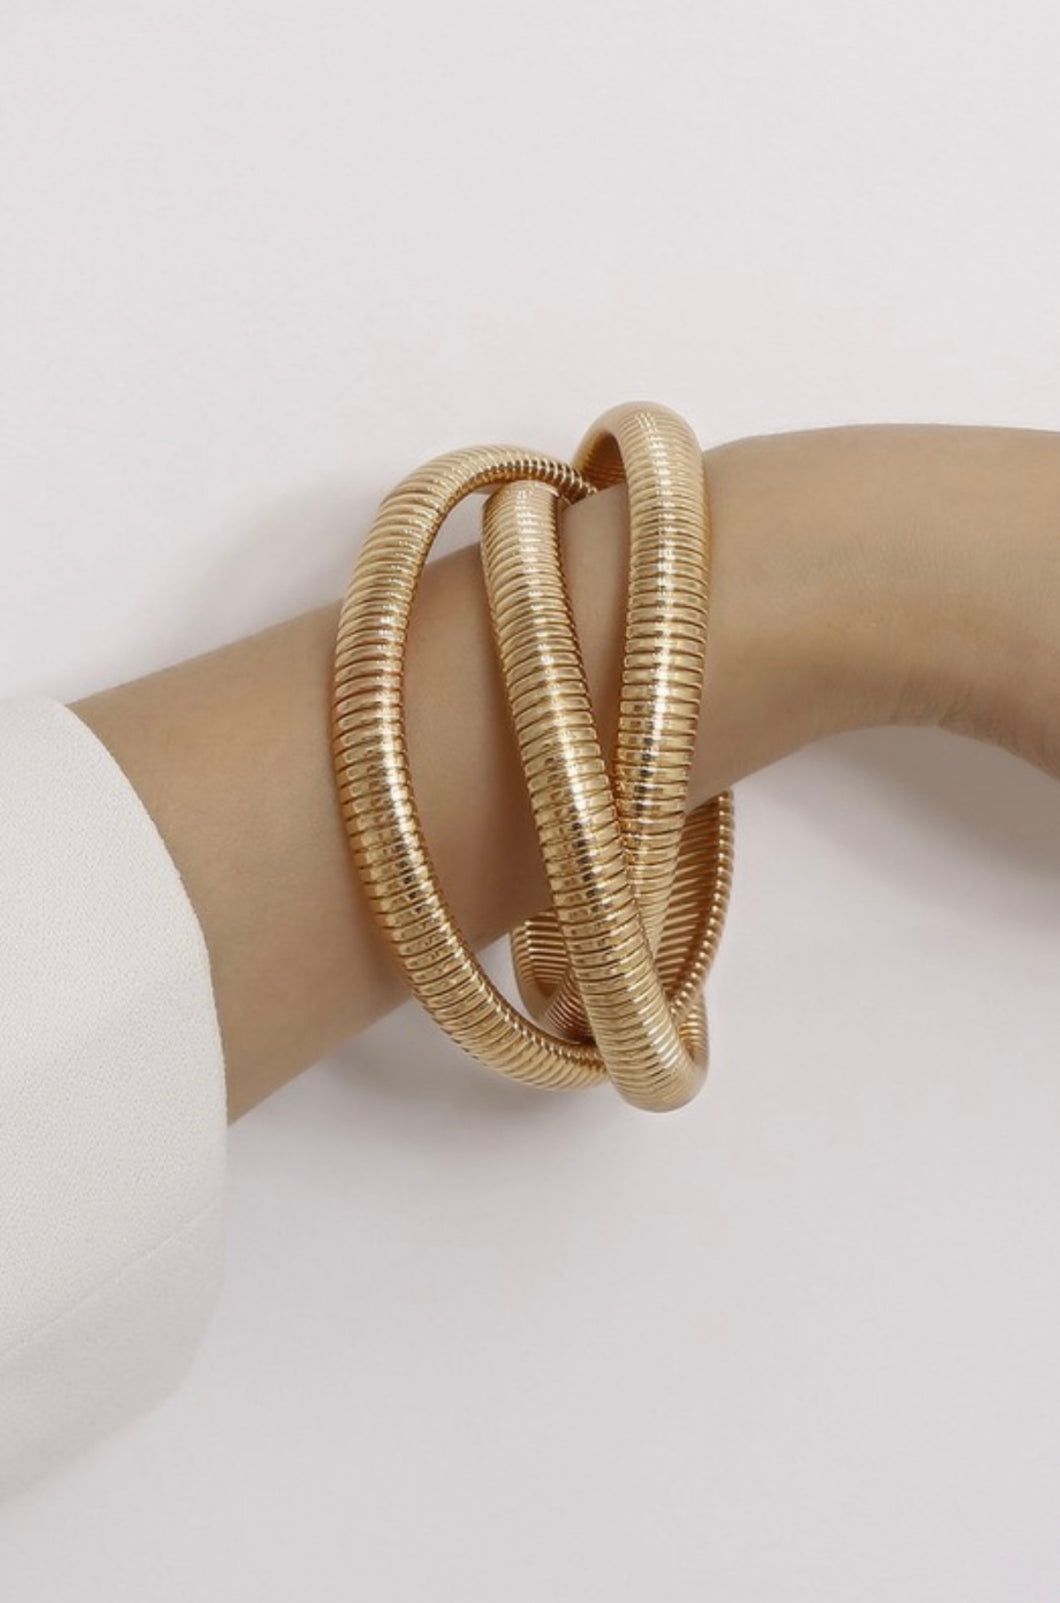 DON'T GET IT TWISTED coil style bangle bracelet set